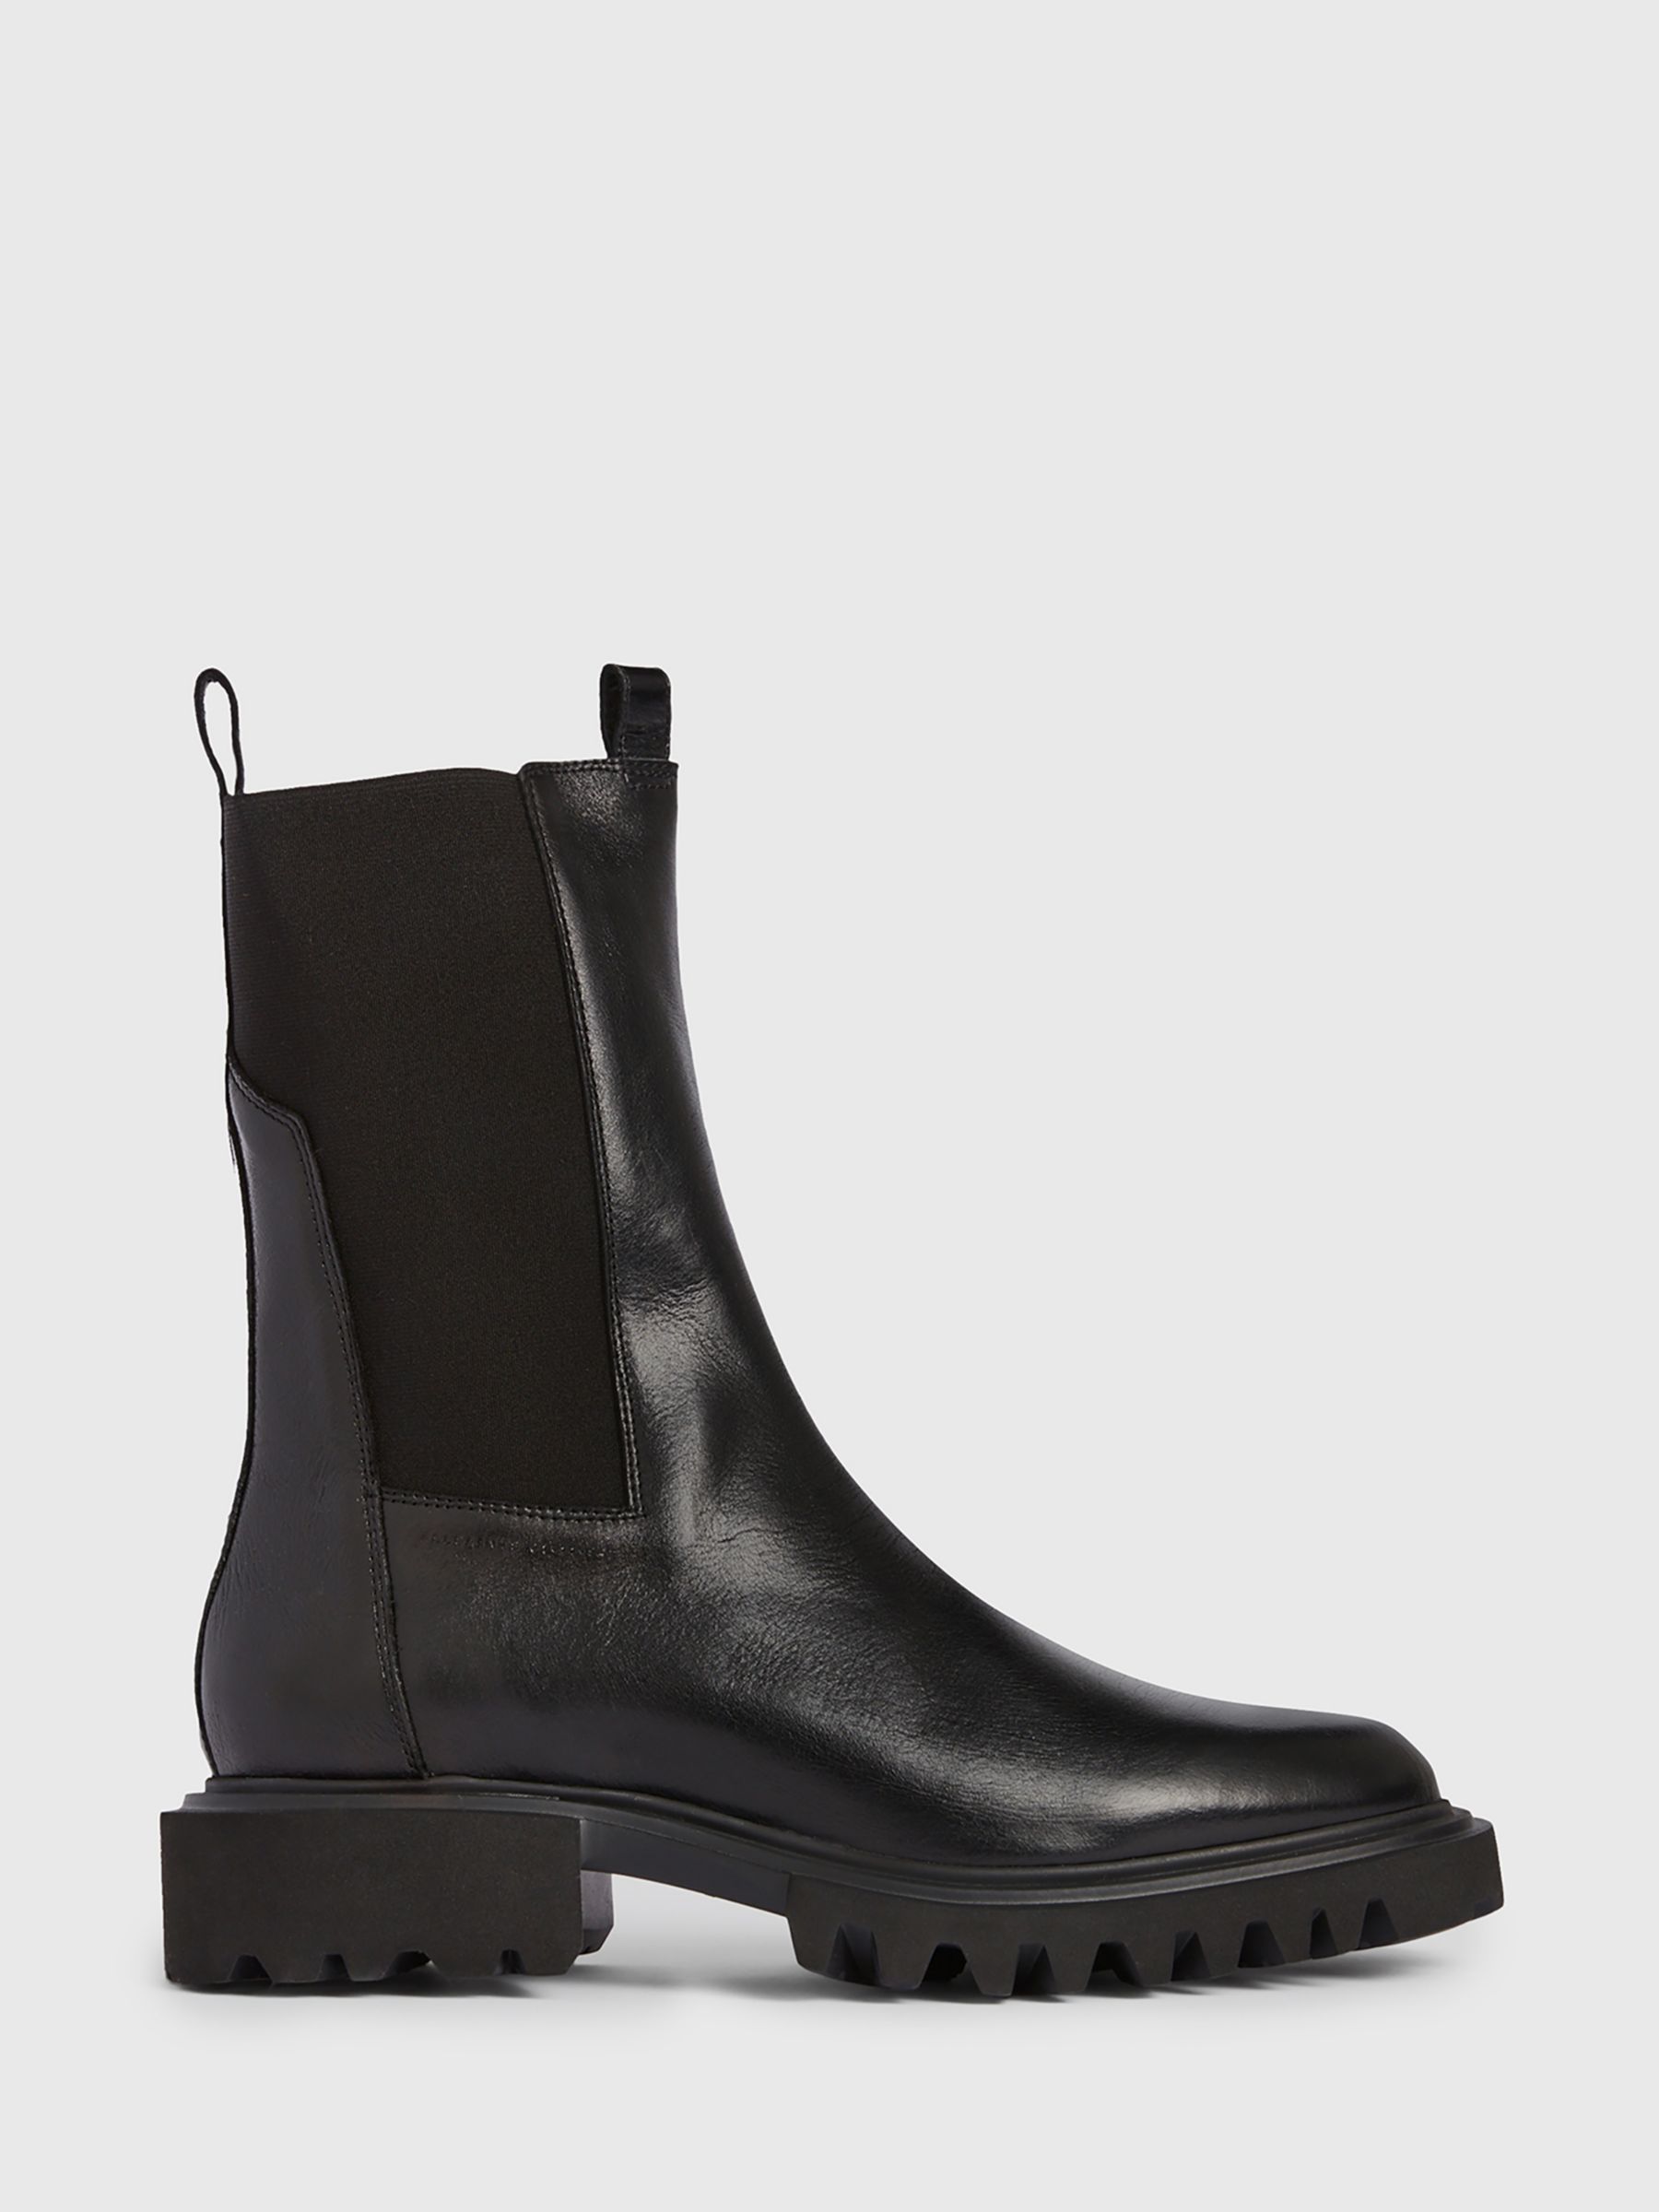 AllSaints Hallie Leather Boots, Black at John Lewis & Partners